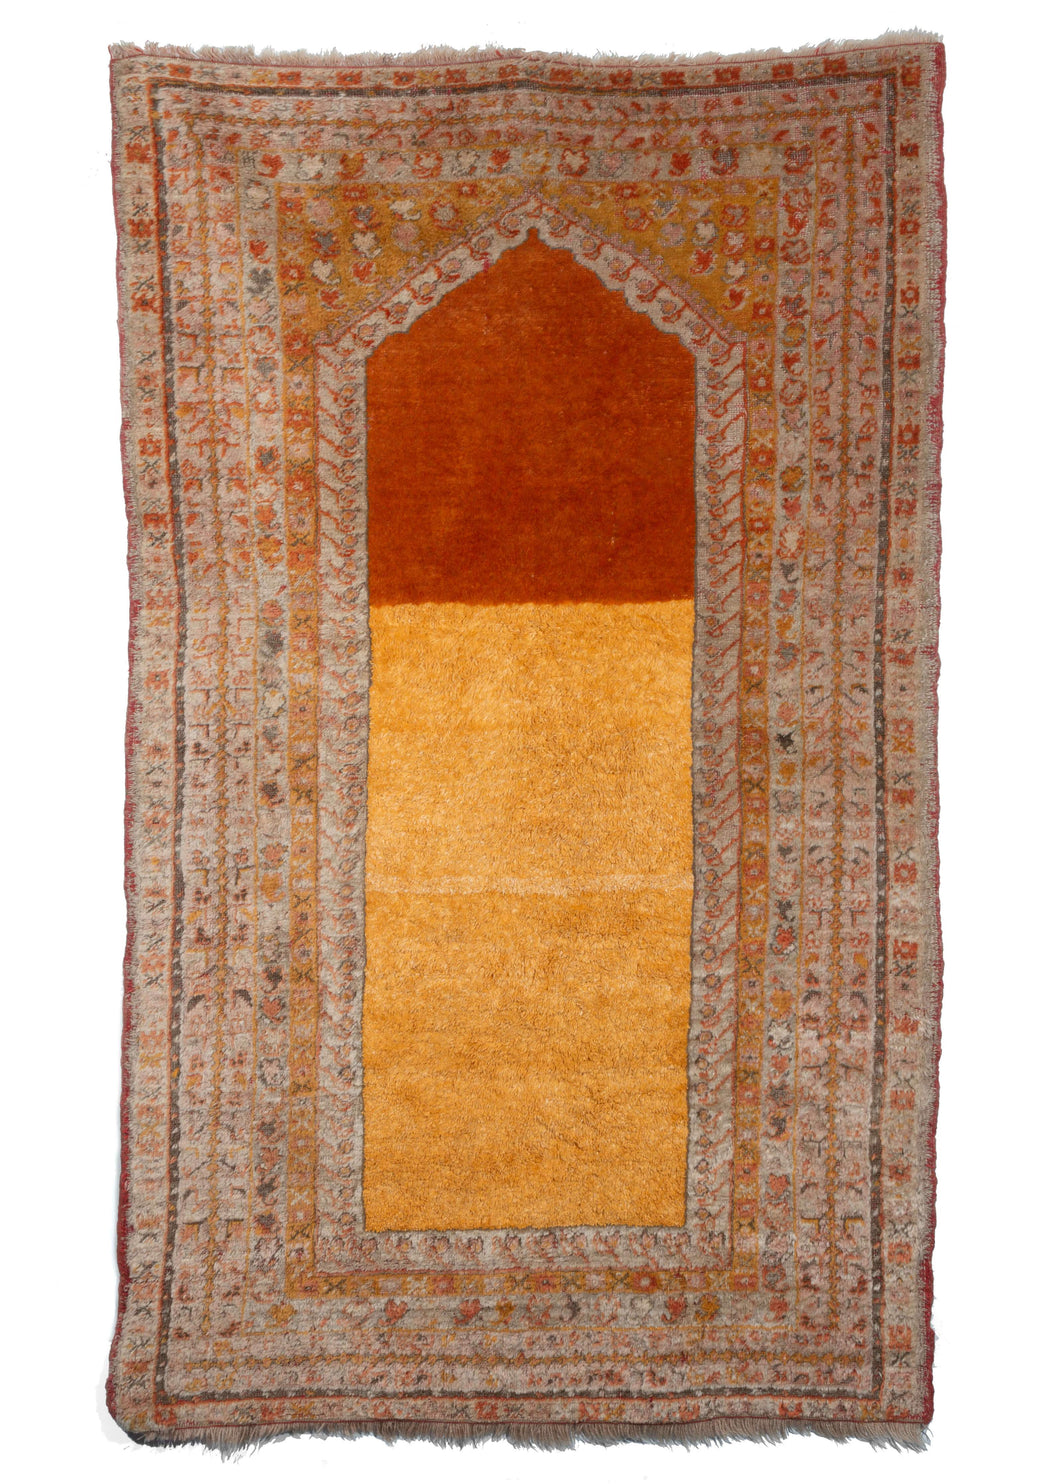 Antique Turkish Oushak Prayer handwoven rug with grey, gold and orange tones